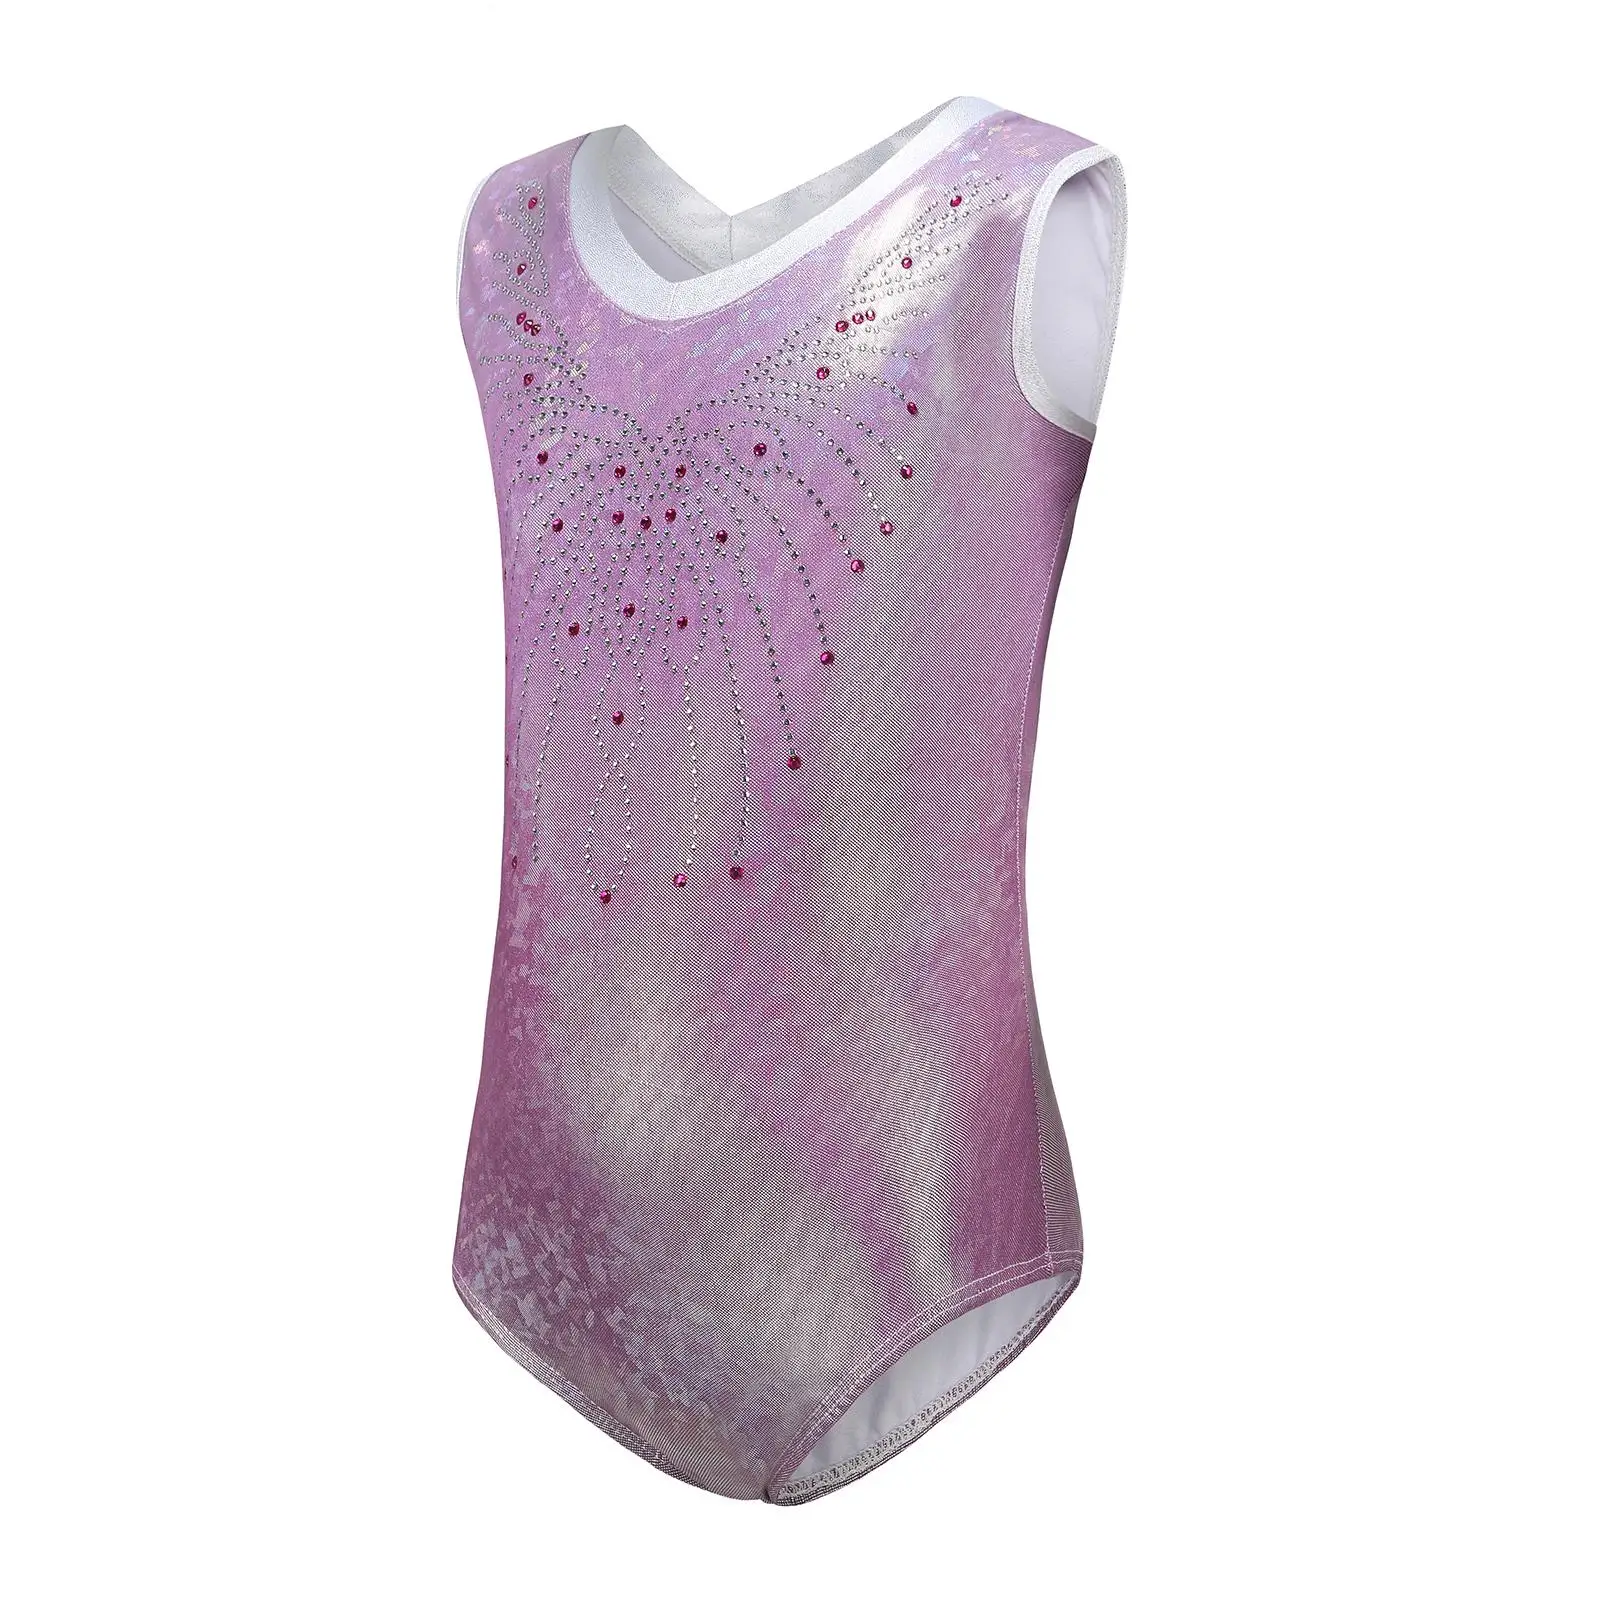 Girls Gymnastics Leotard Athletic Costume Elastic Dancewear Sparkly Jumpsuit